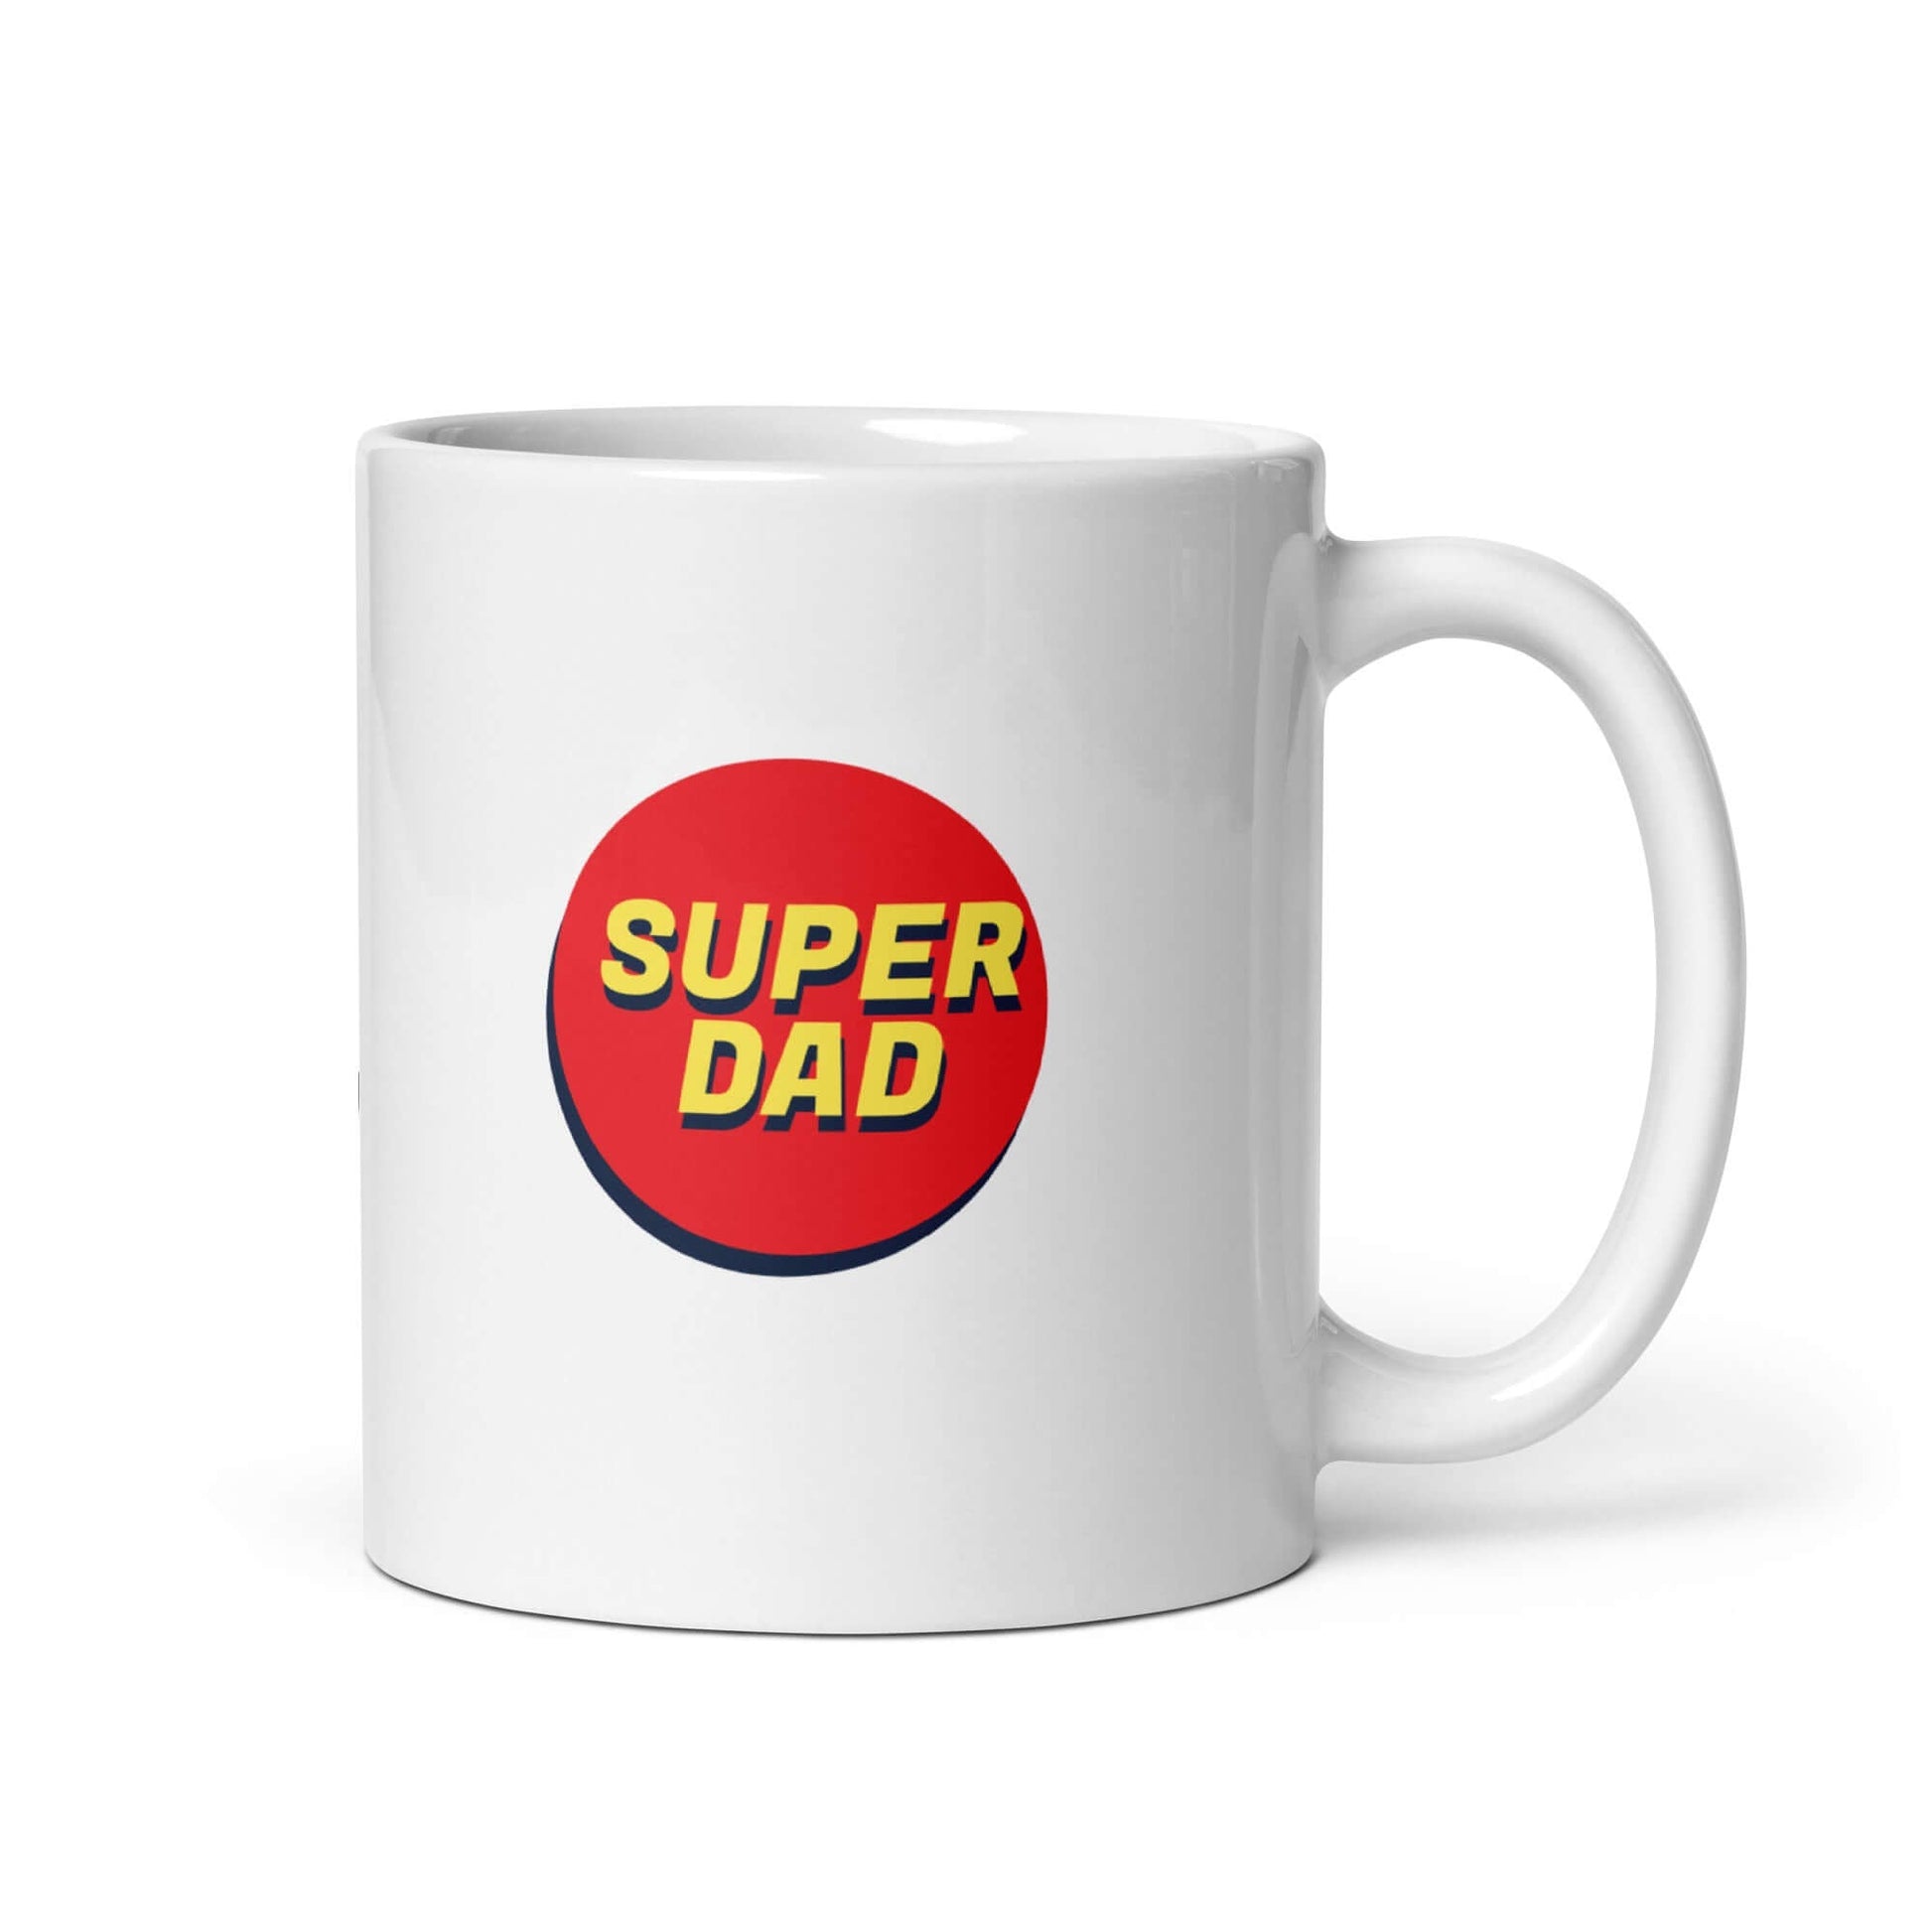 Super Dad - White glossy mug - Horrible Designs